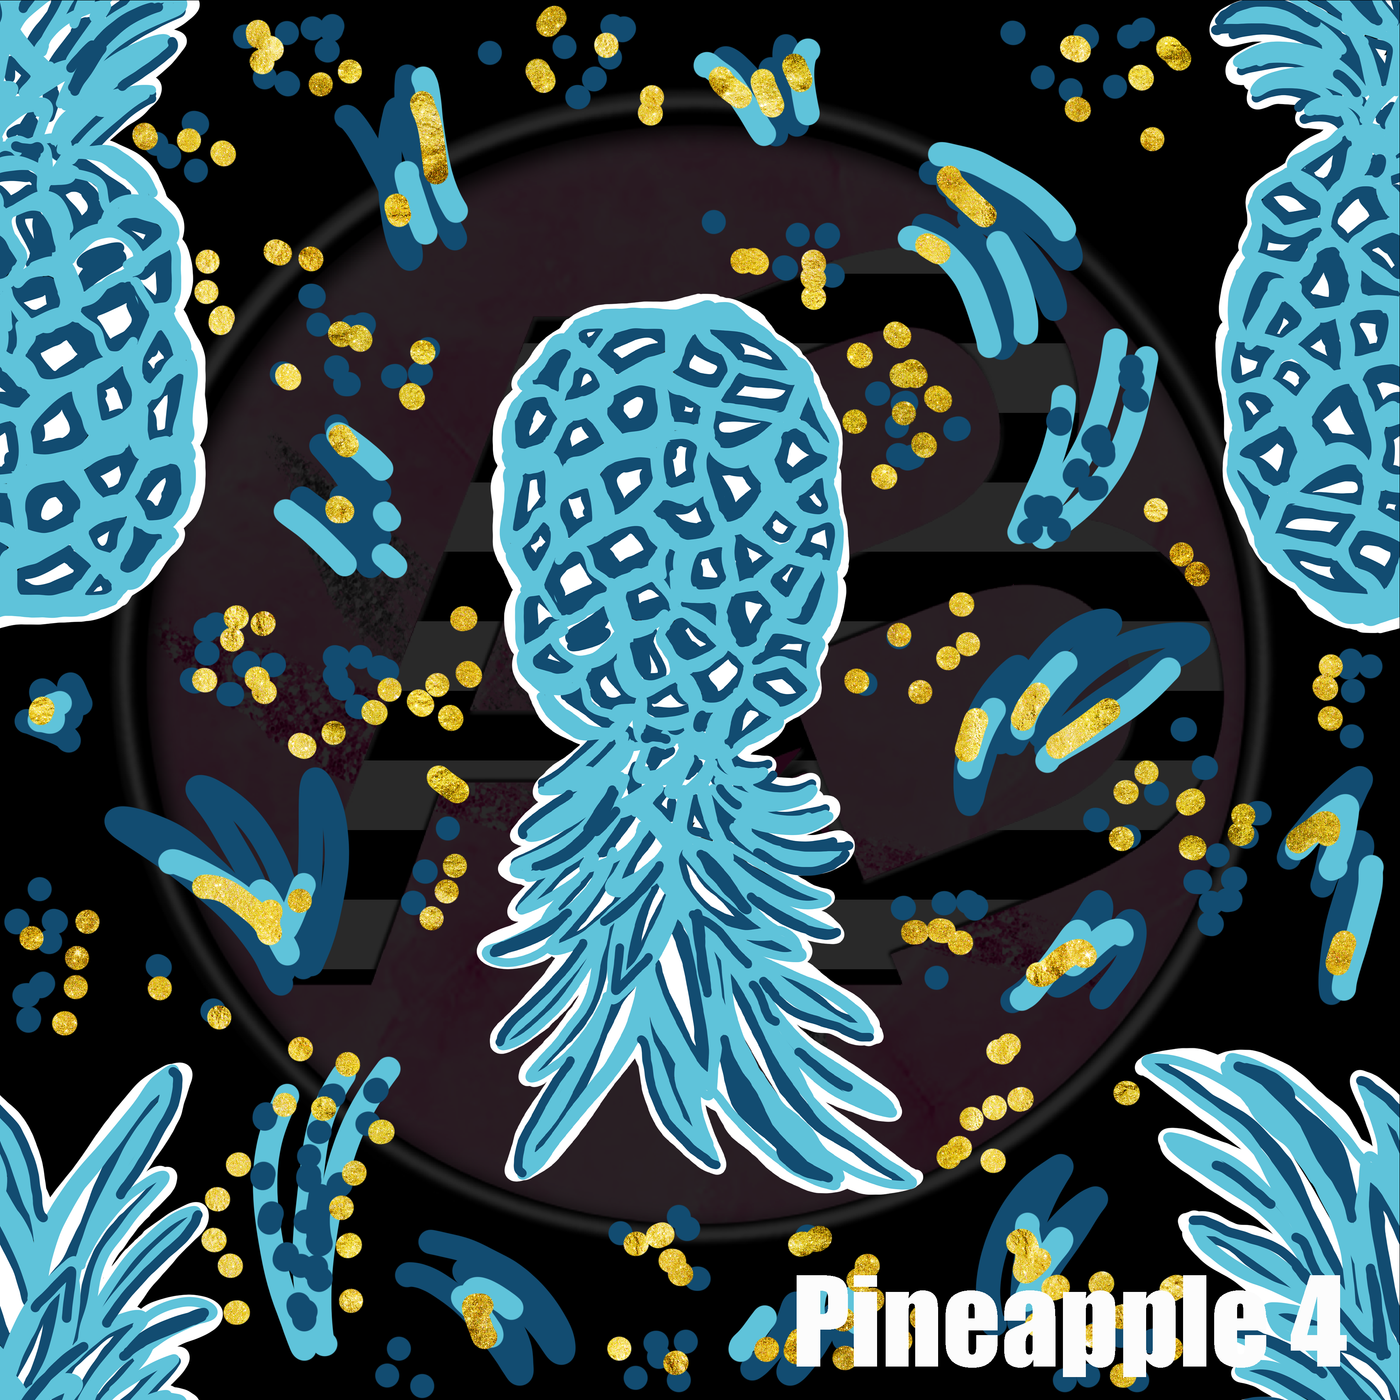 Adhesive Patterned Vinyl - Pineapple 4